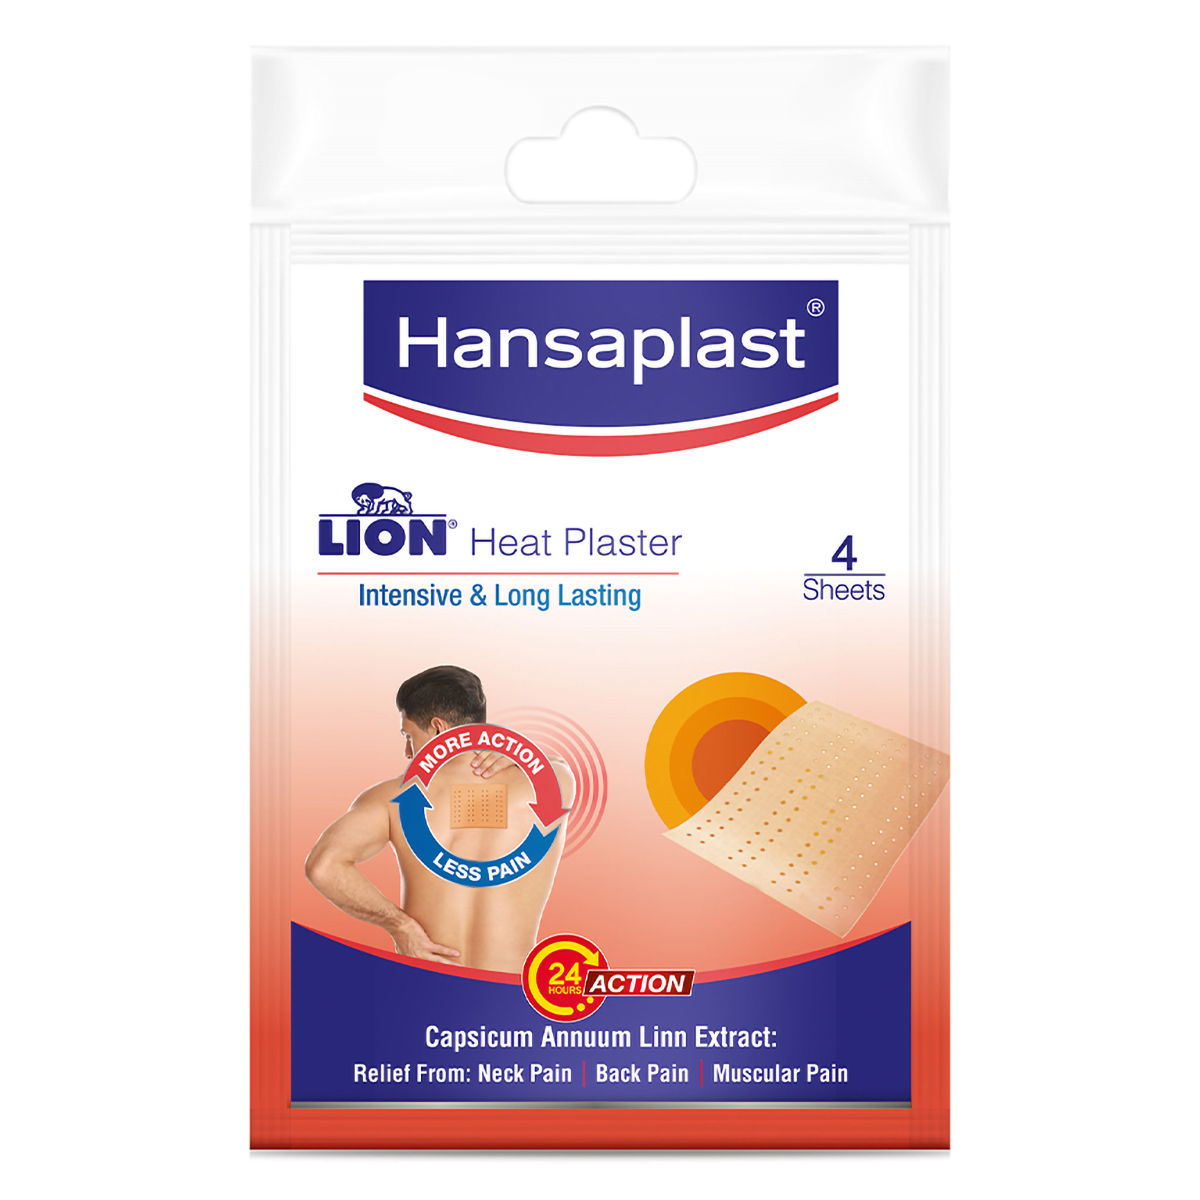 Buy Hansaplast Lion Heat Plaster Sheet, 4 Count Online